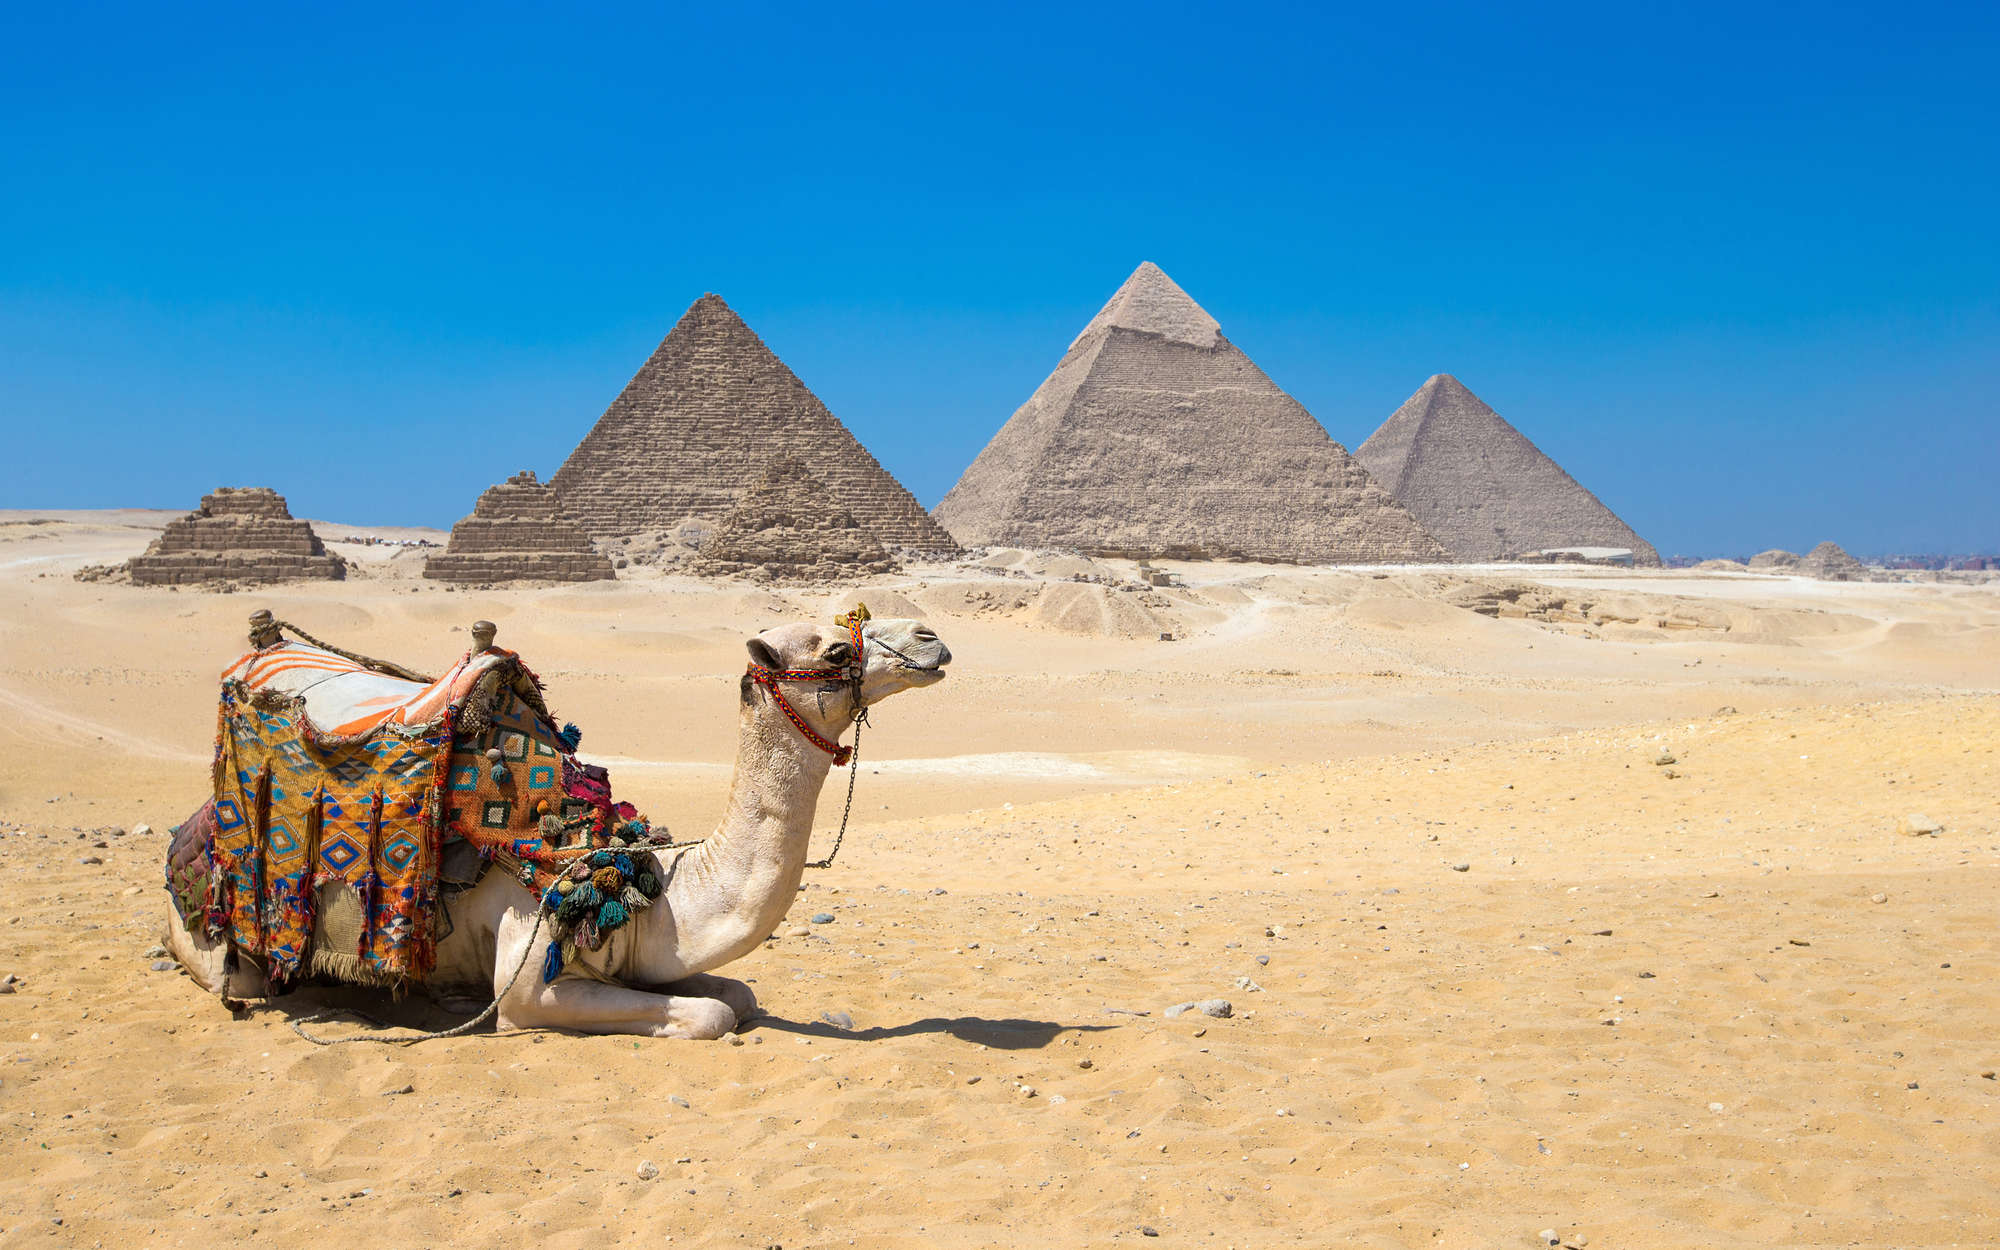             Piramides van Gizeh Onderlaag behang met Kameel - Premium Glad Vlies
        